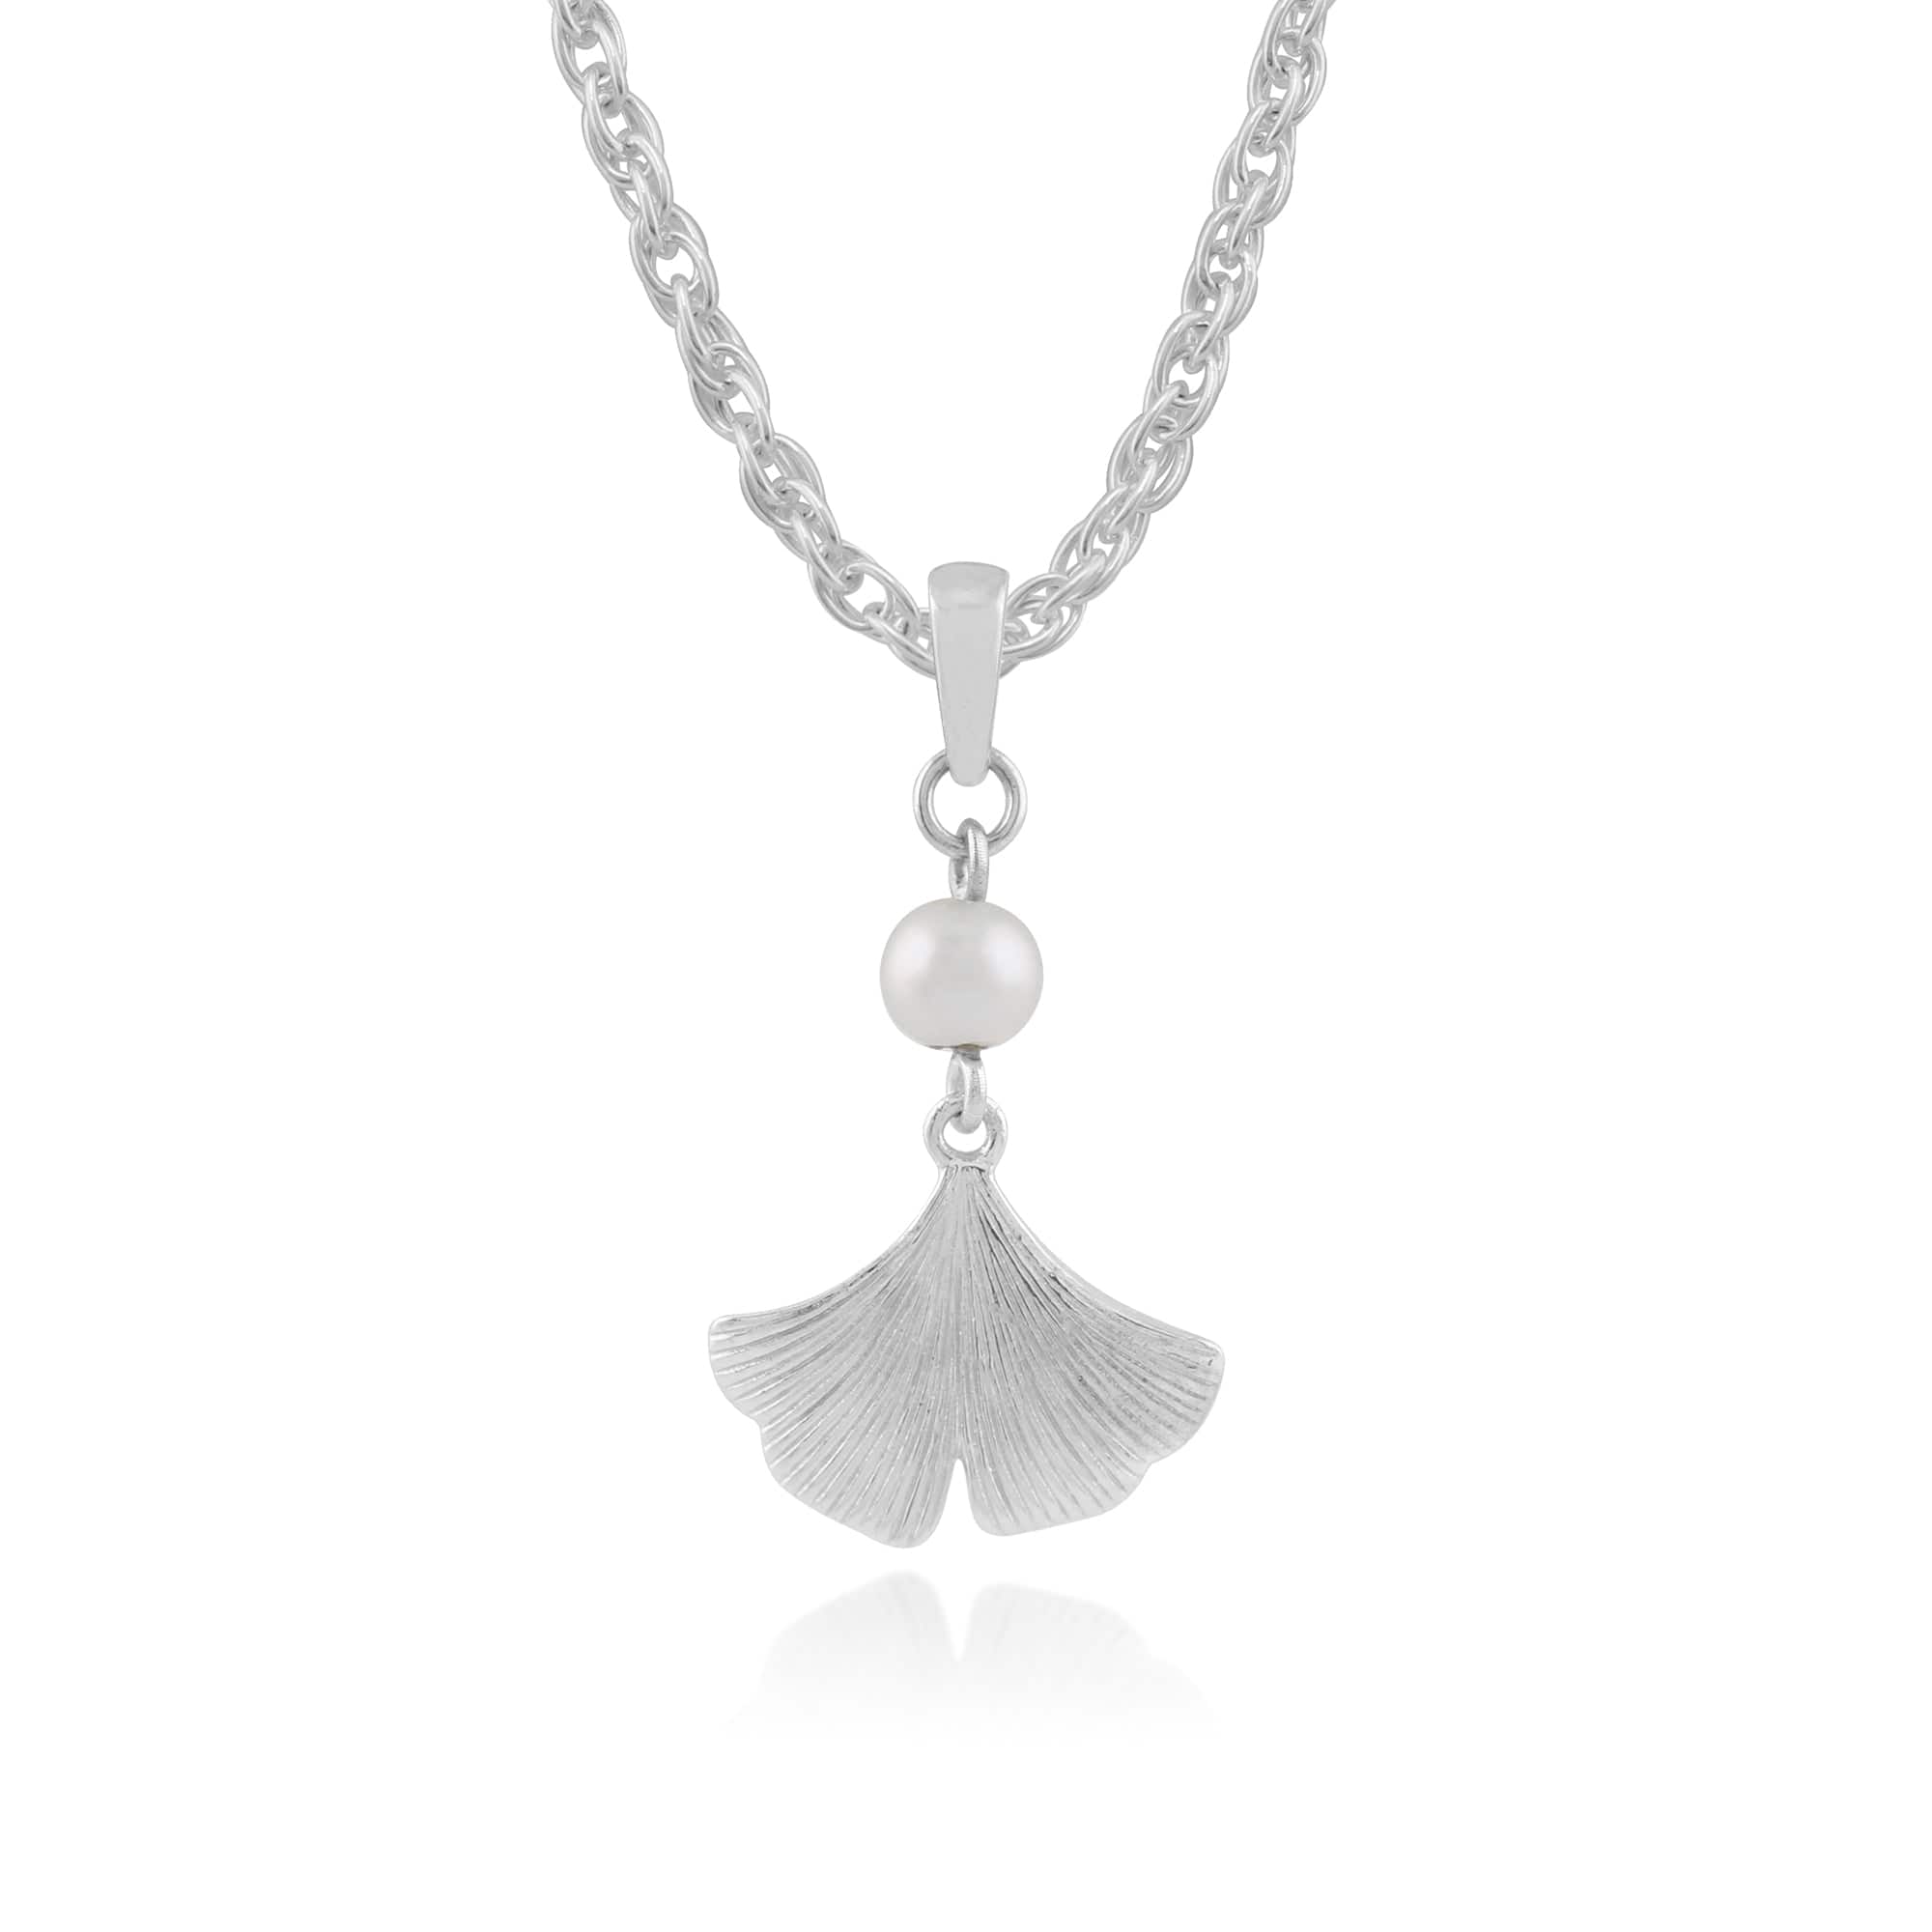 Floral Pearl Gingko Leaf Pendant in 925 Sterling Silver - Gemondo